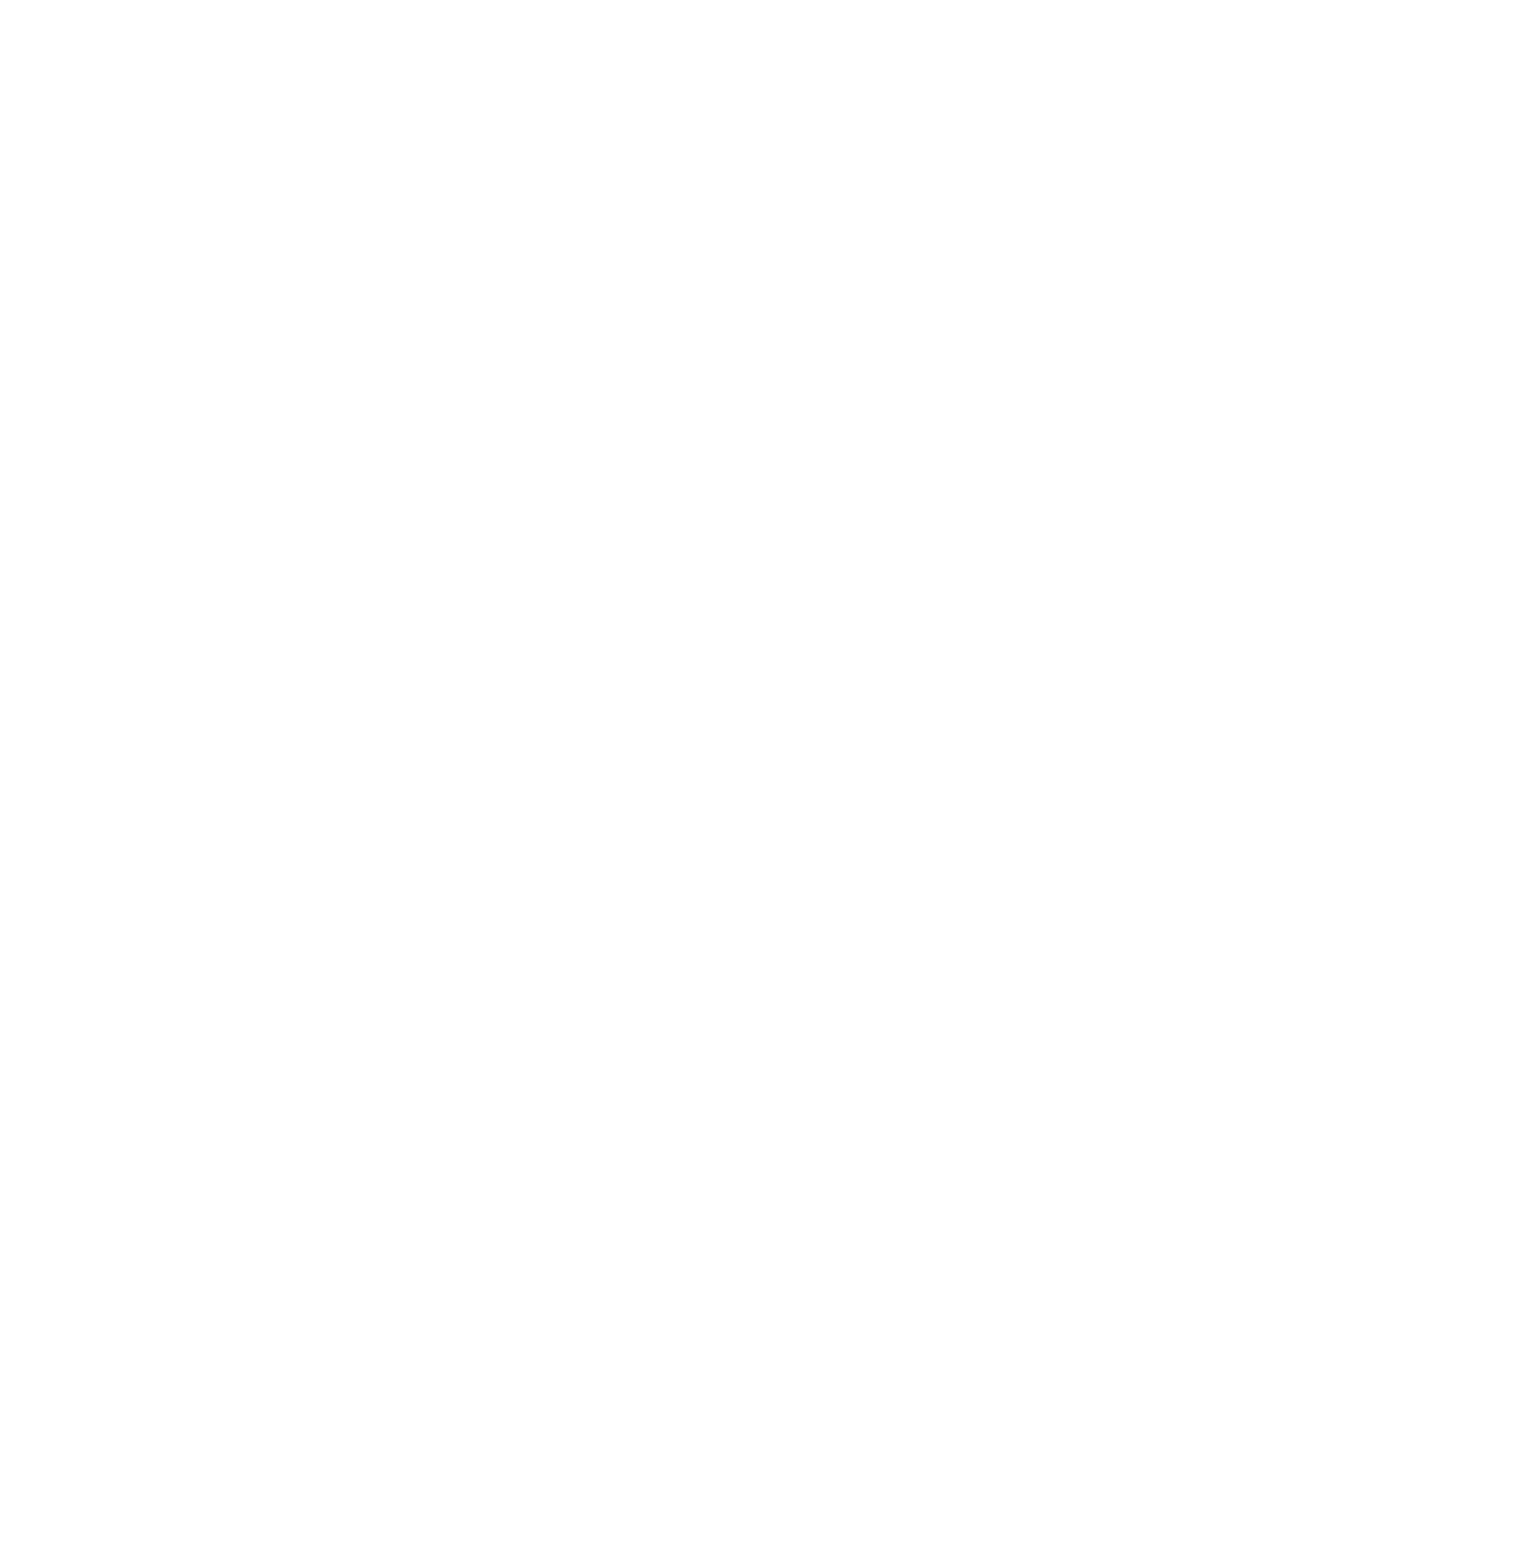 Tenet Healthcare logo for dark backgrounds (transparent PNG)